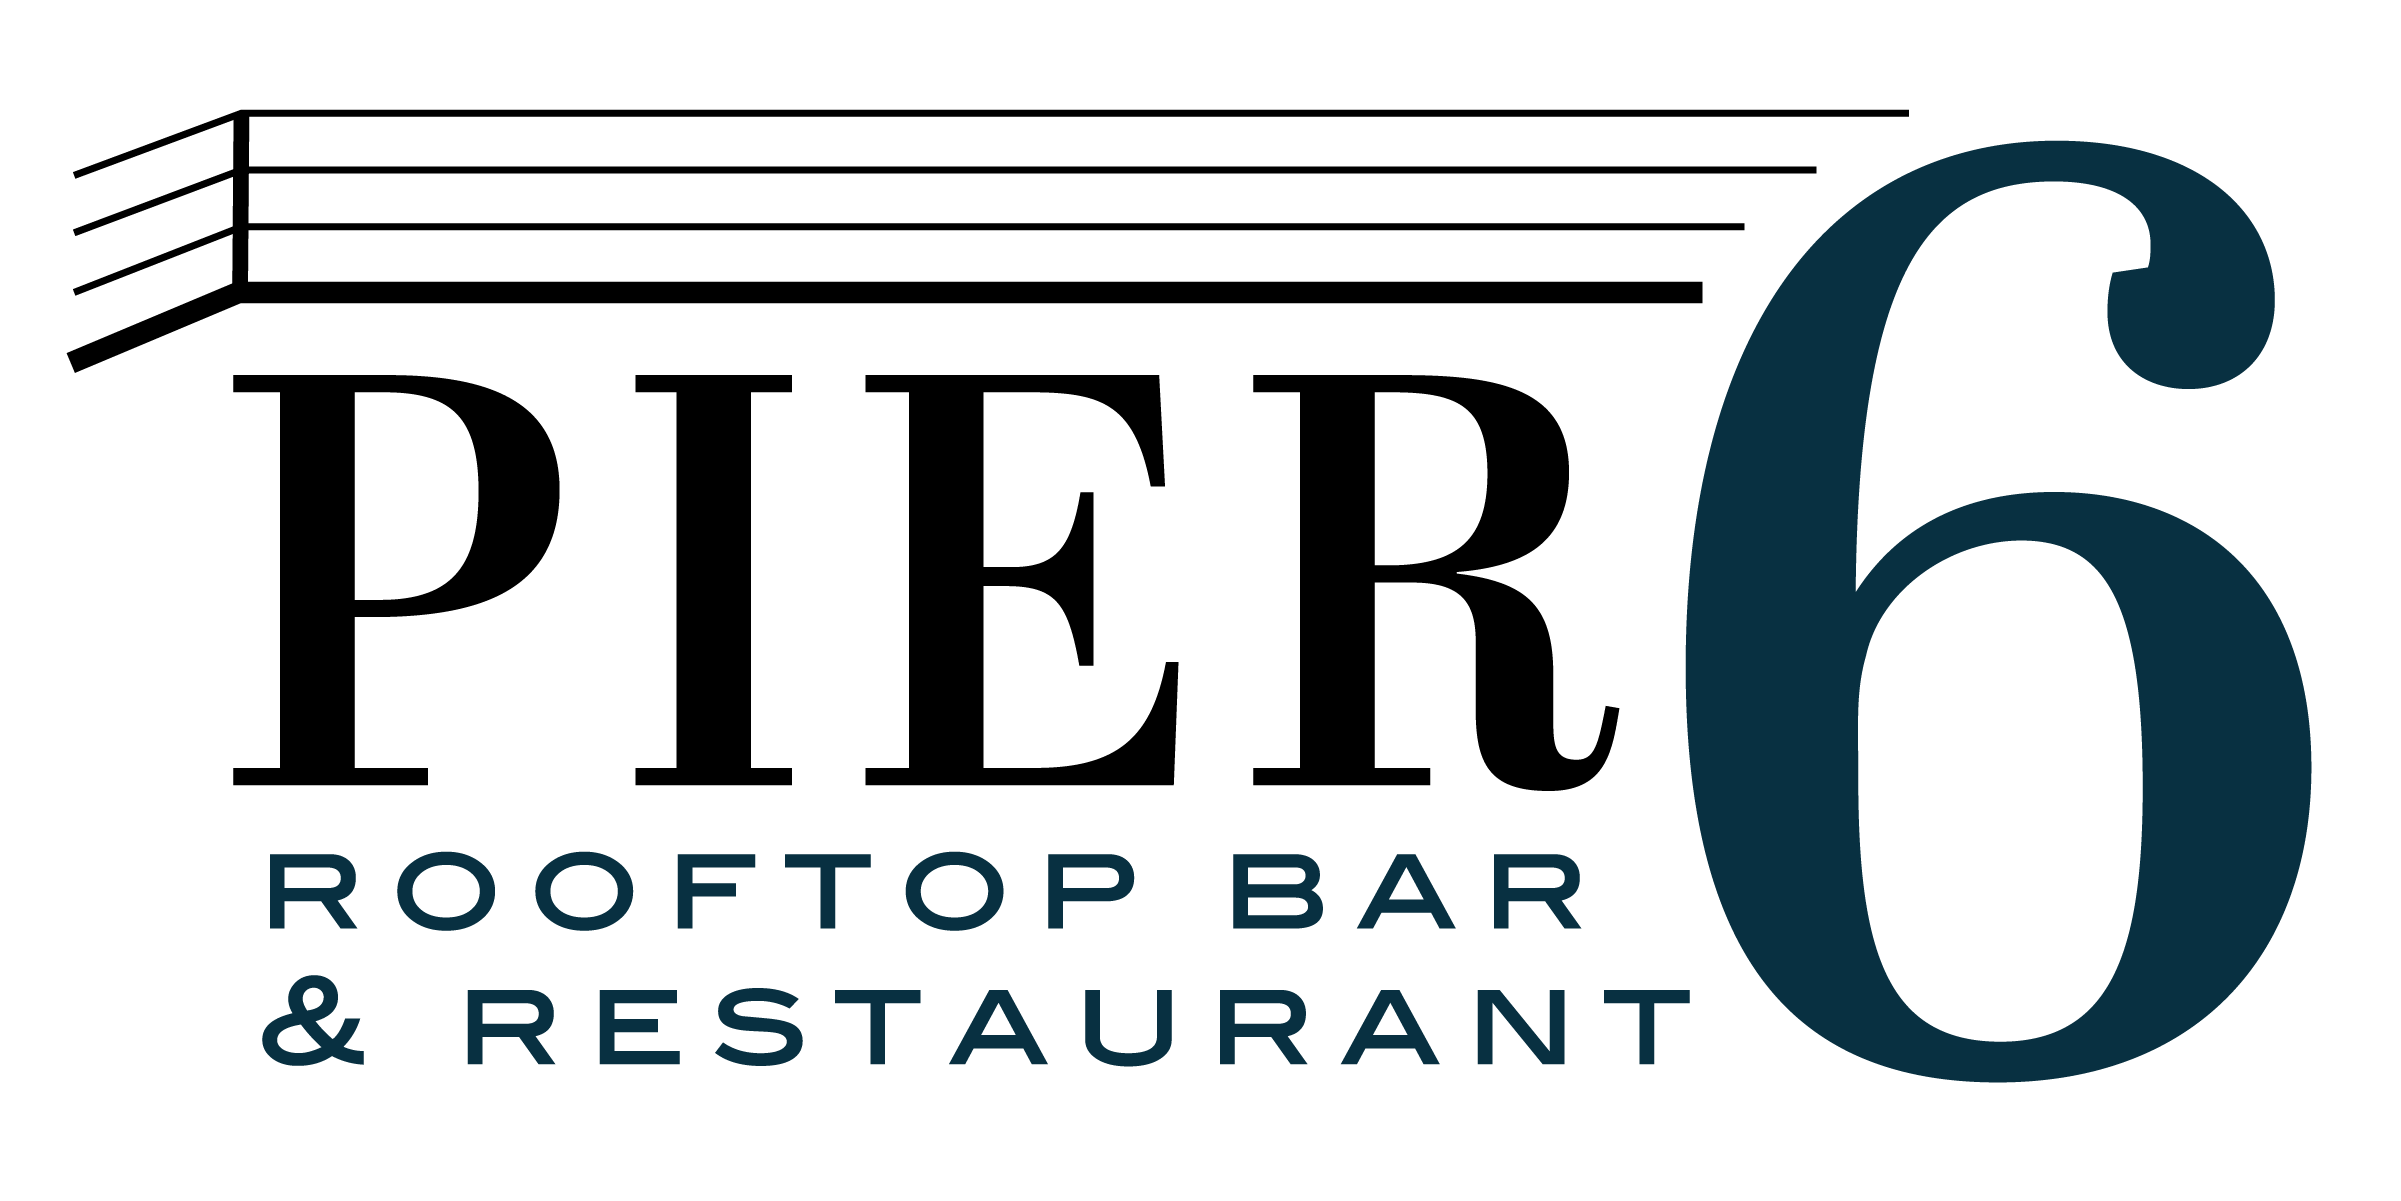 Pier 6 Rooftop Bar Restaurant logo hr v2